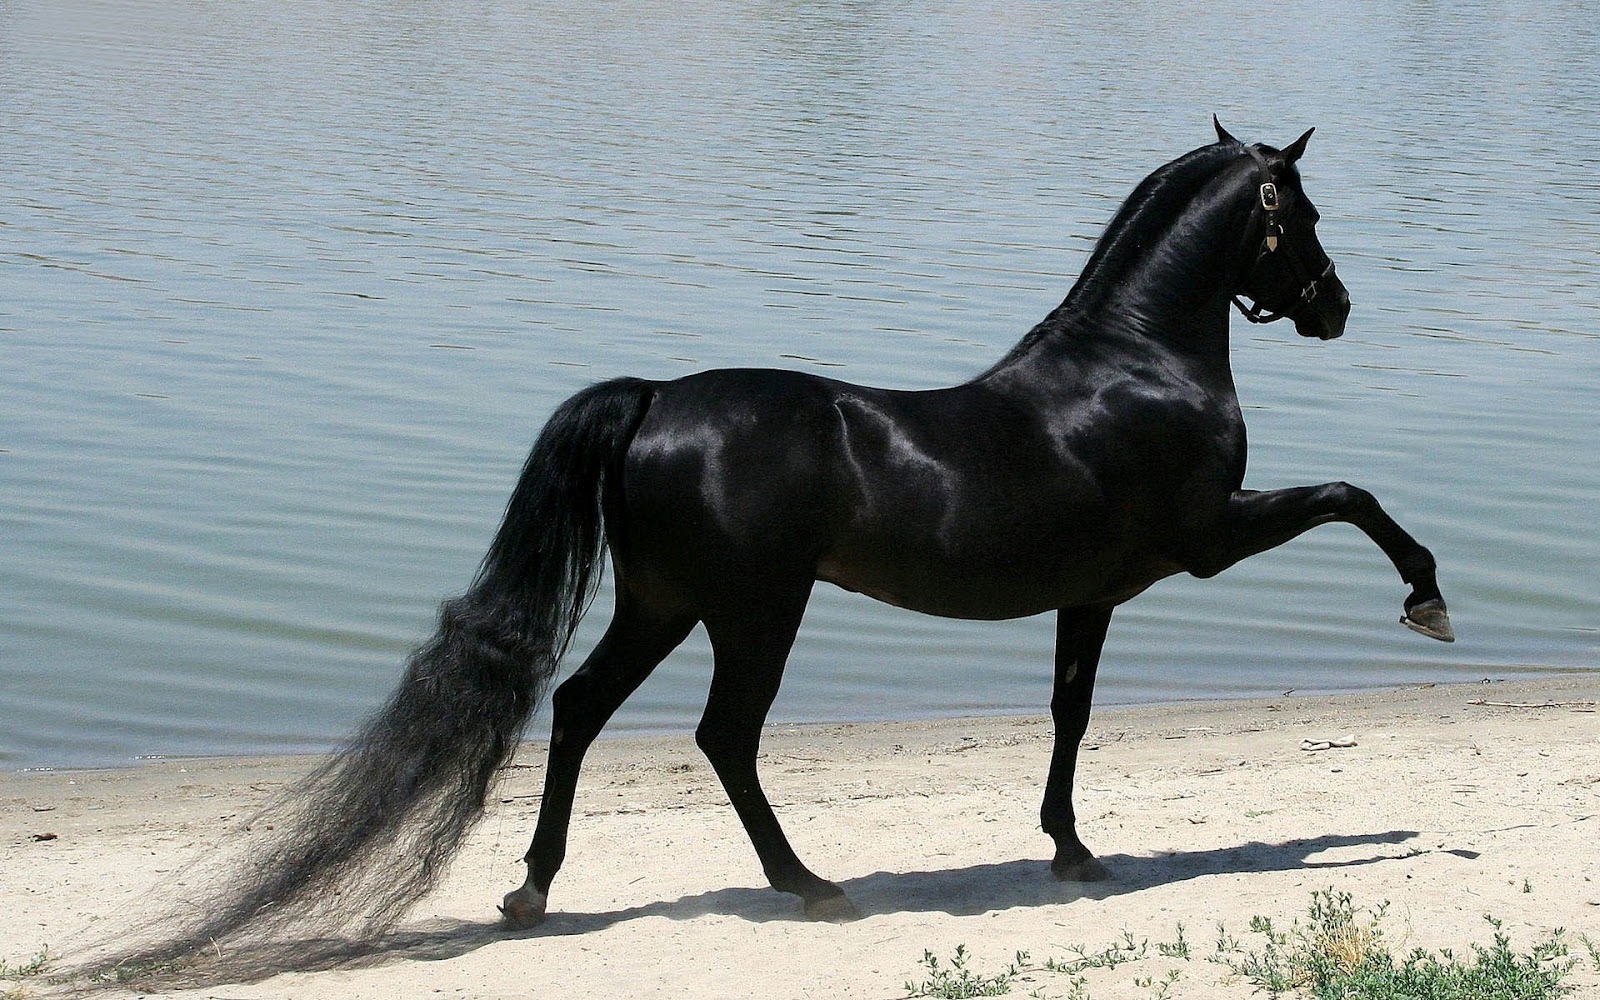 Black horse 1080P, 2K, 4K, 5K HD wallpapers free download